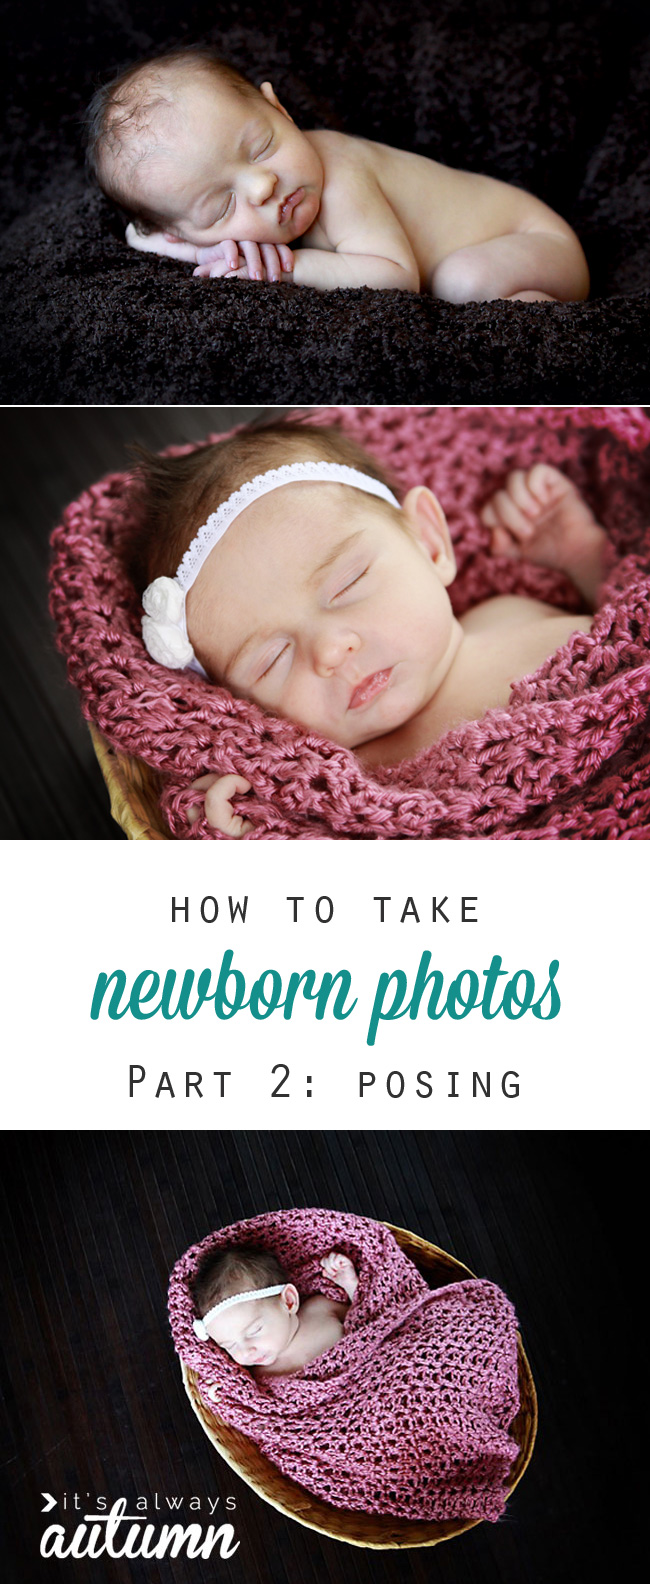 Collage of newborn baby photos